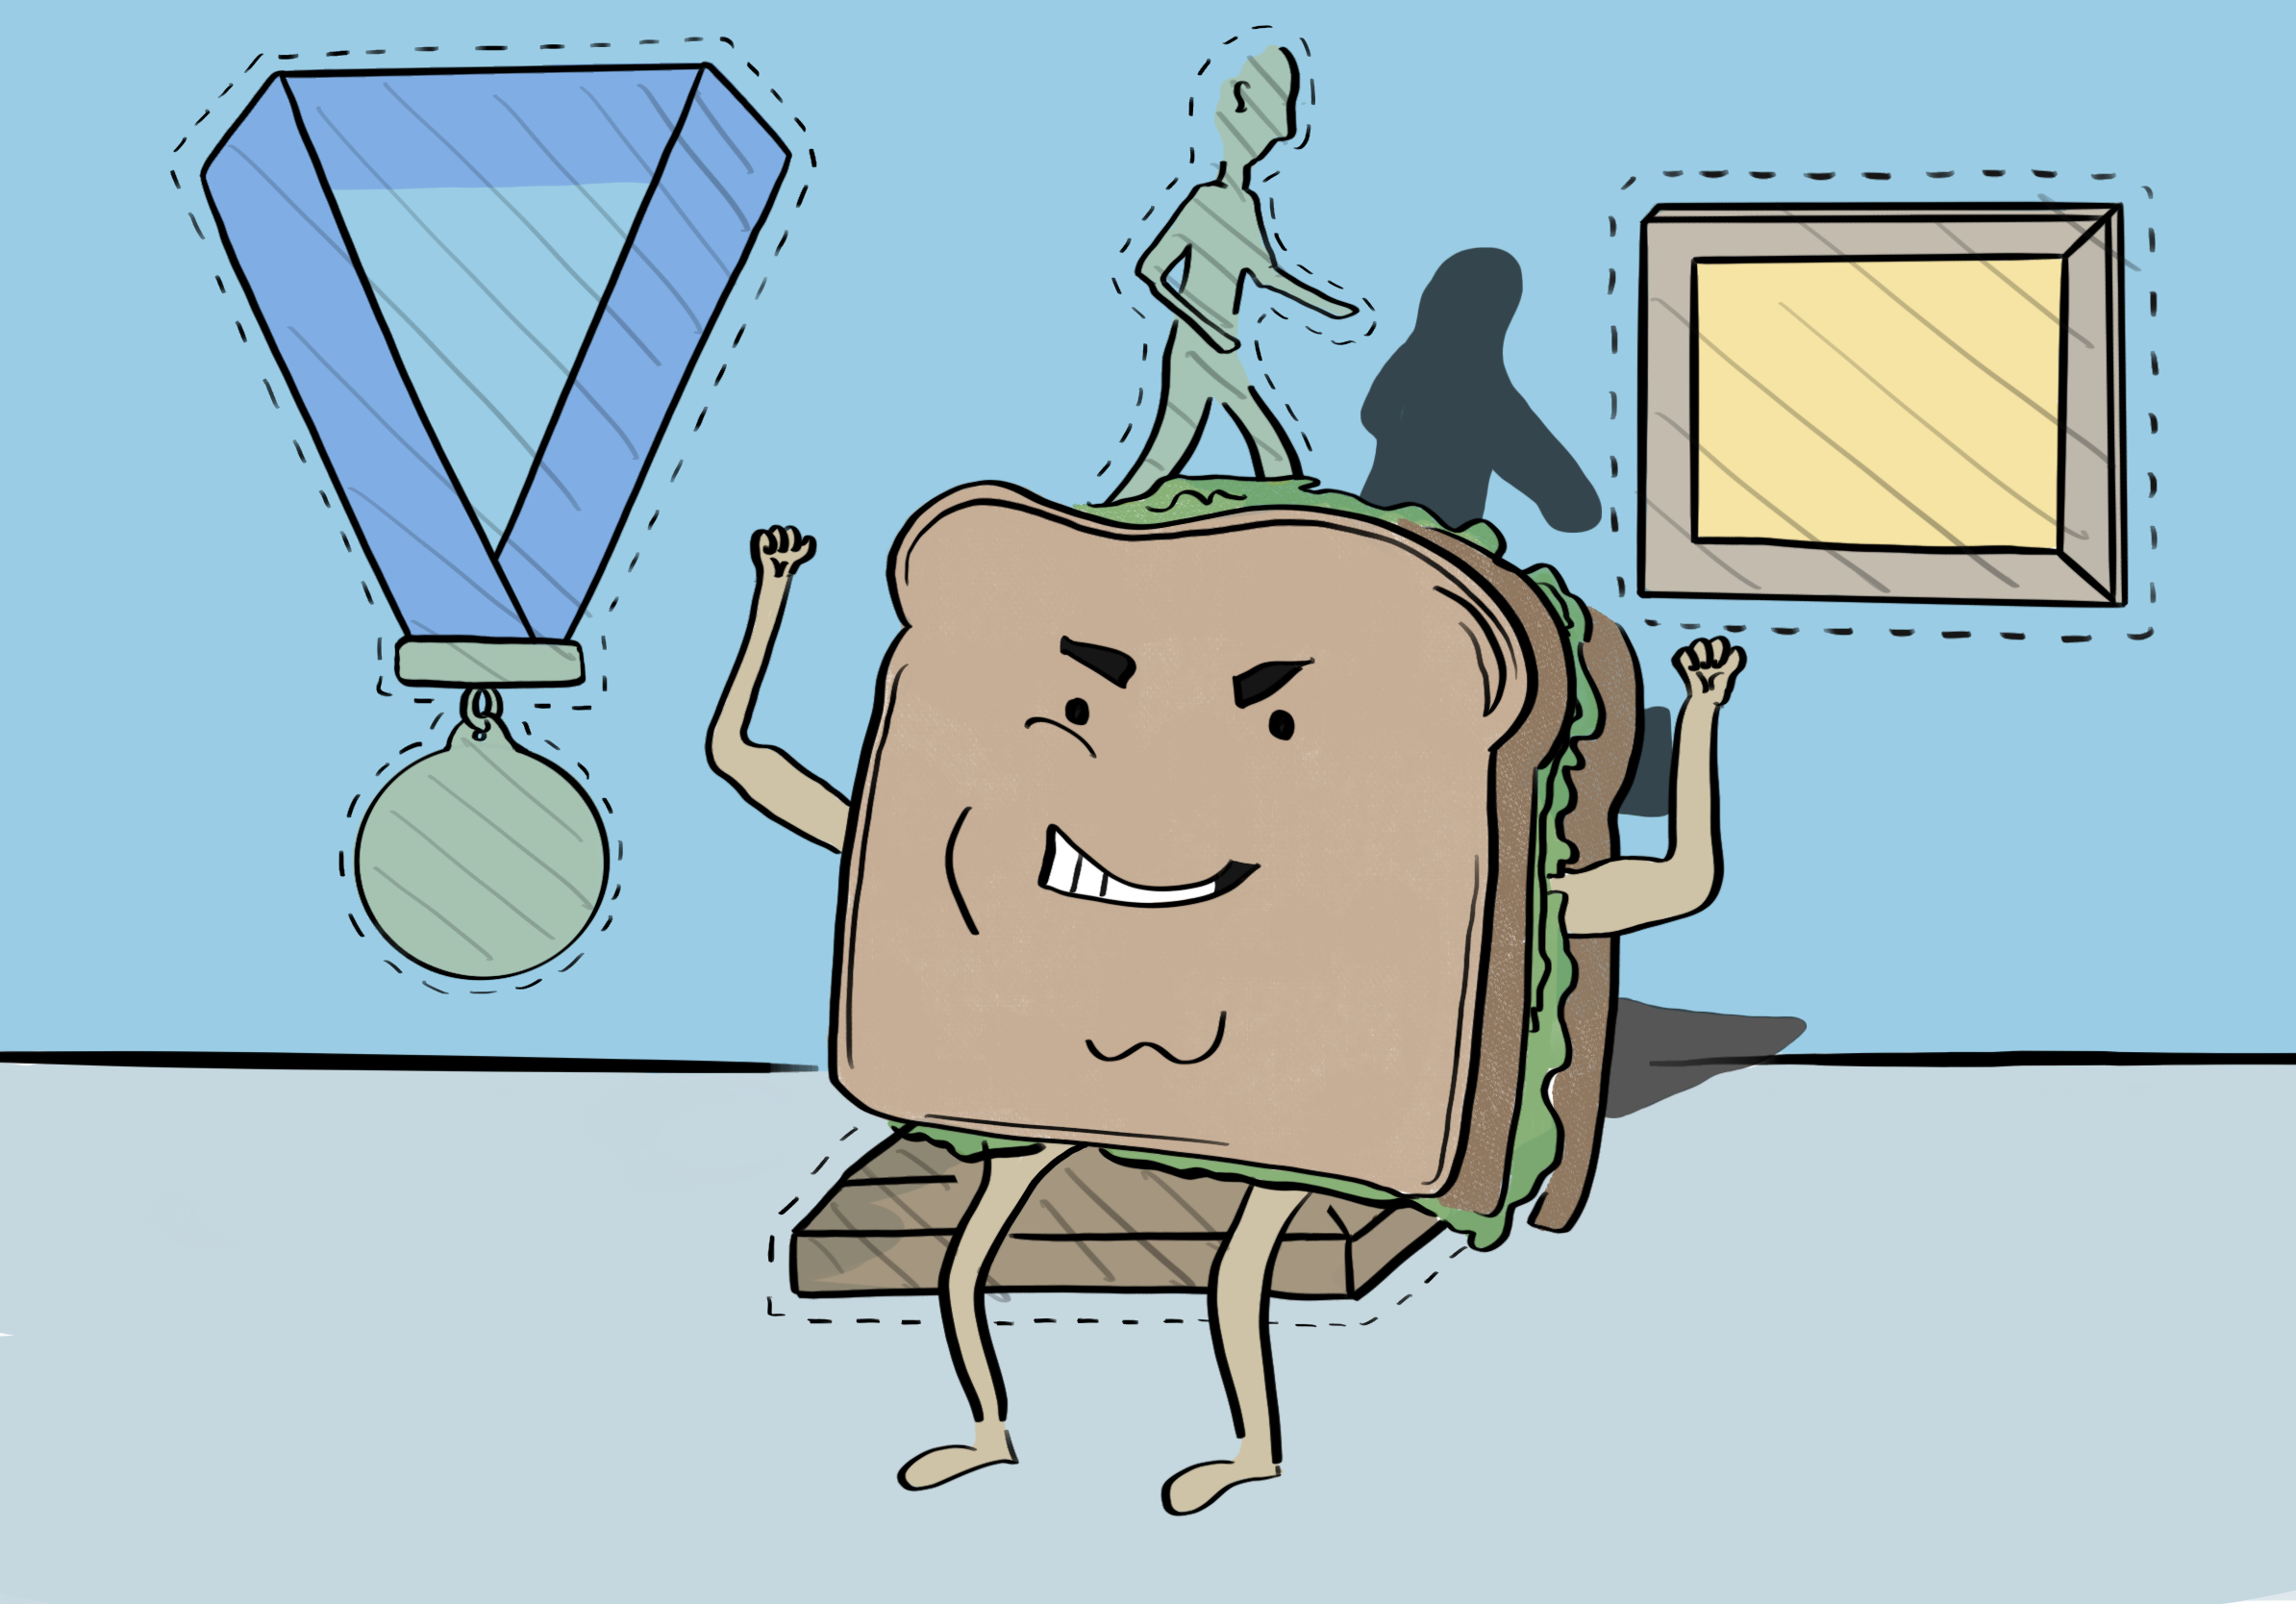 Thumbnail for Lilian v sandwich: Who will win?